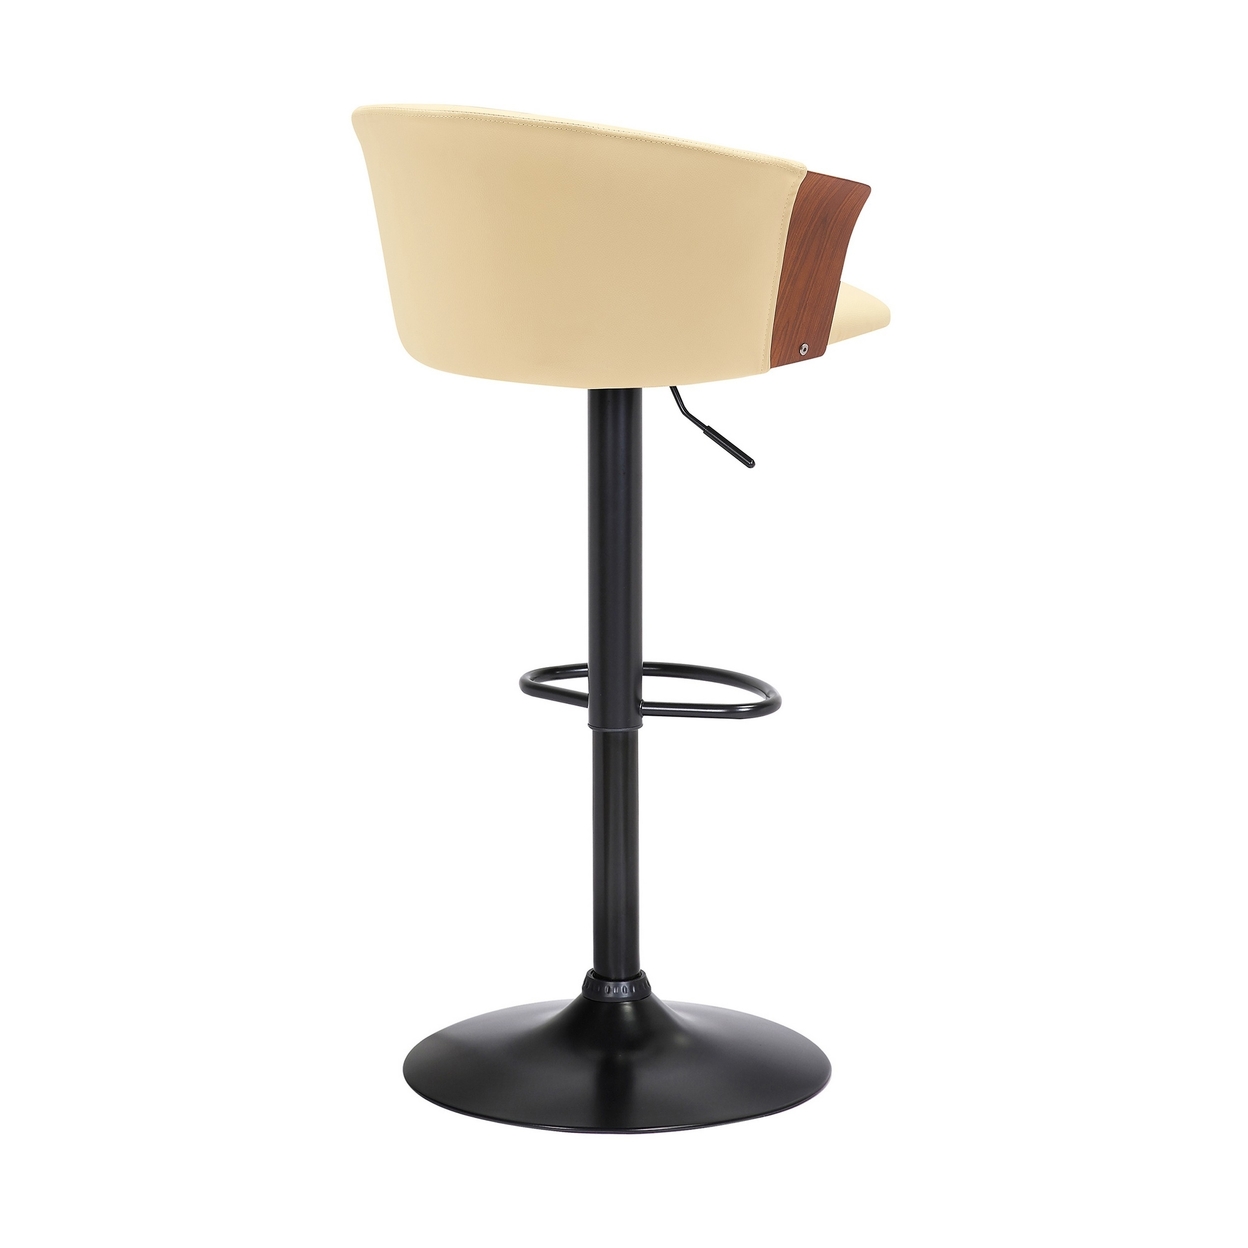 Liz 24-33 Inch Adjustable Height Swivel Barstool Chair, Cream Faux Leather - Saltoro Sherpi